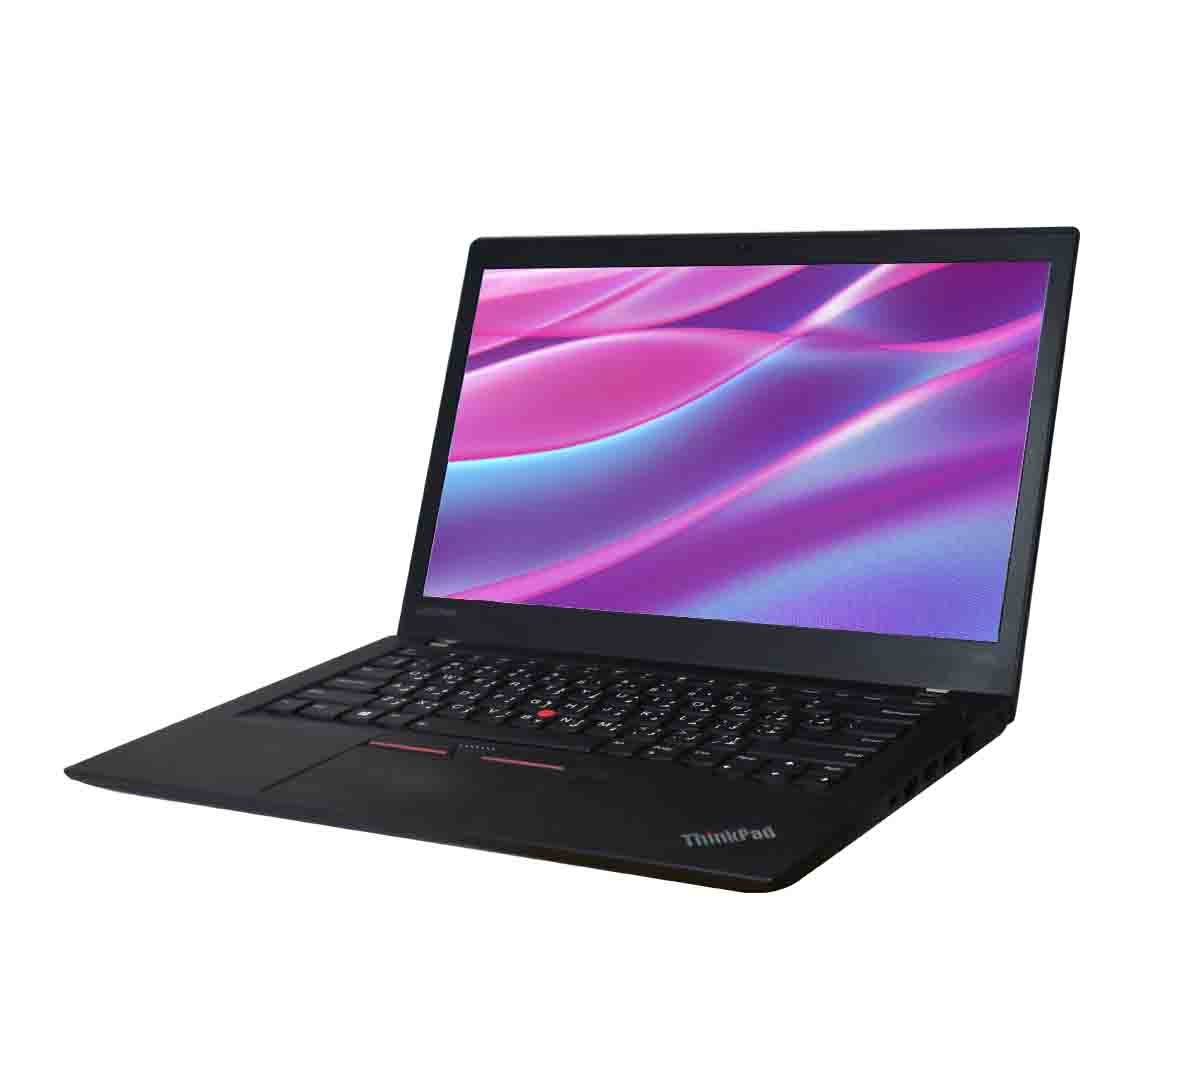 Lenovo ThinkPad T470s Business Laptop, Intel Core i7-7th Generation CPU, 16GB RAM, 512GB SSD, 14 inch Touchscreen, Windows 10 Pro